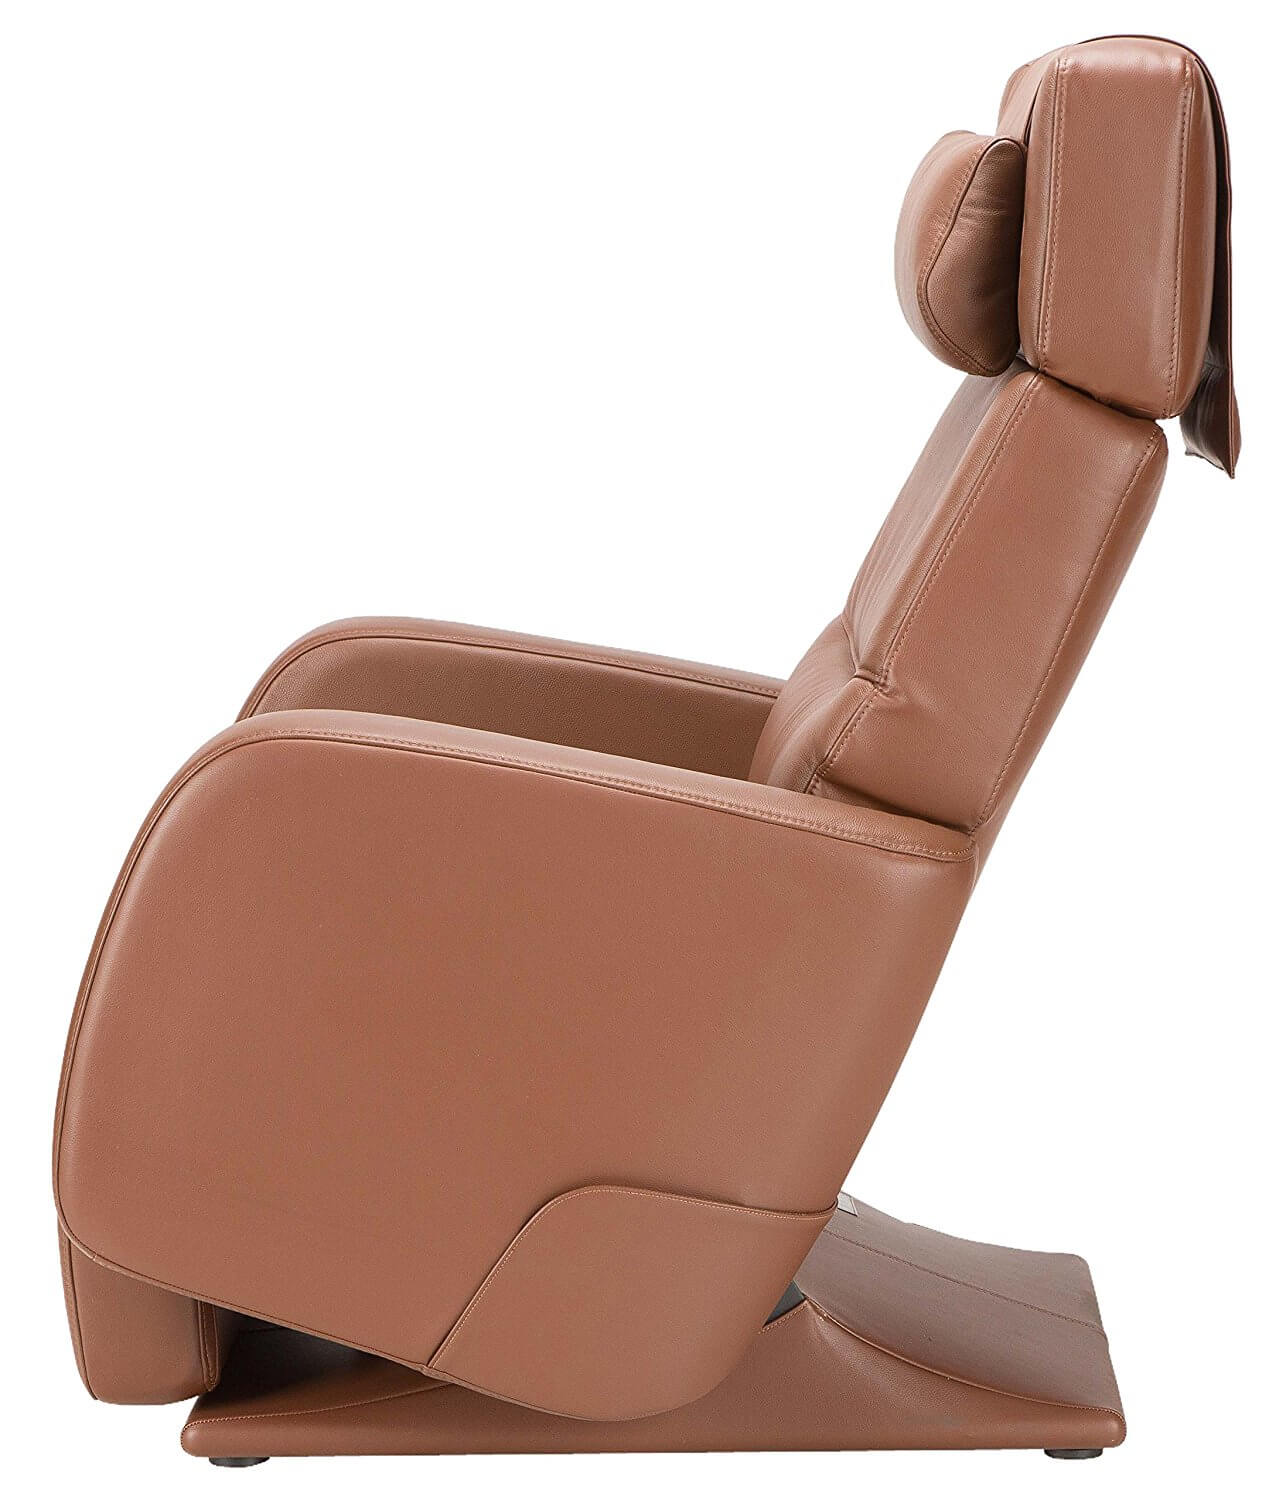 Human Touch Zero-Gravity Chair brown 2